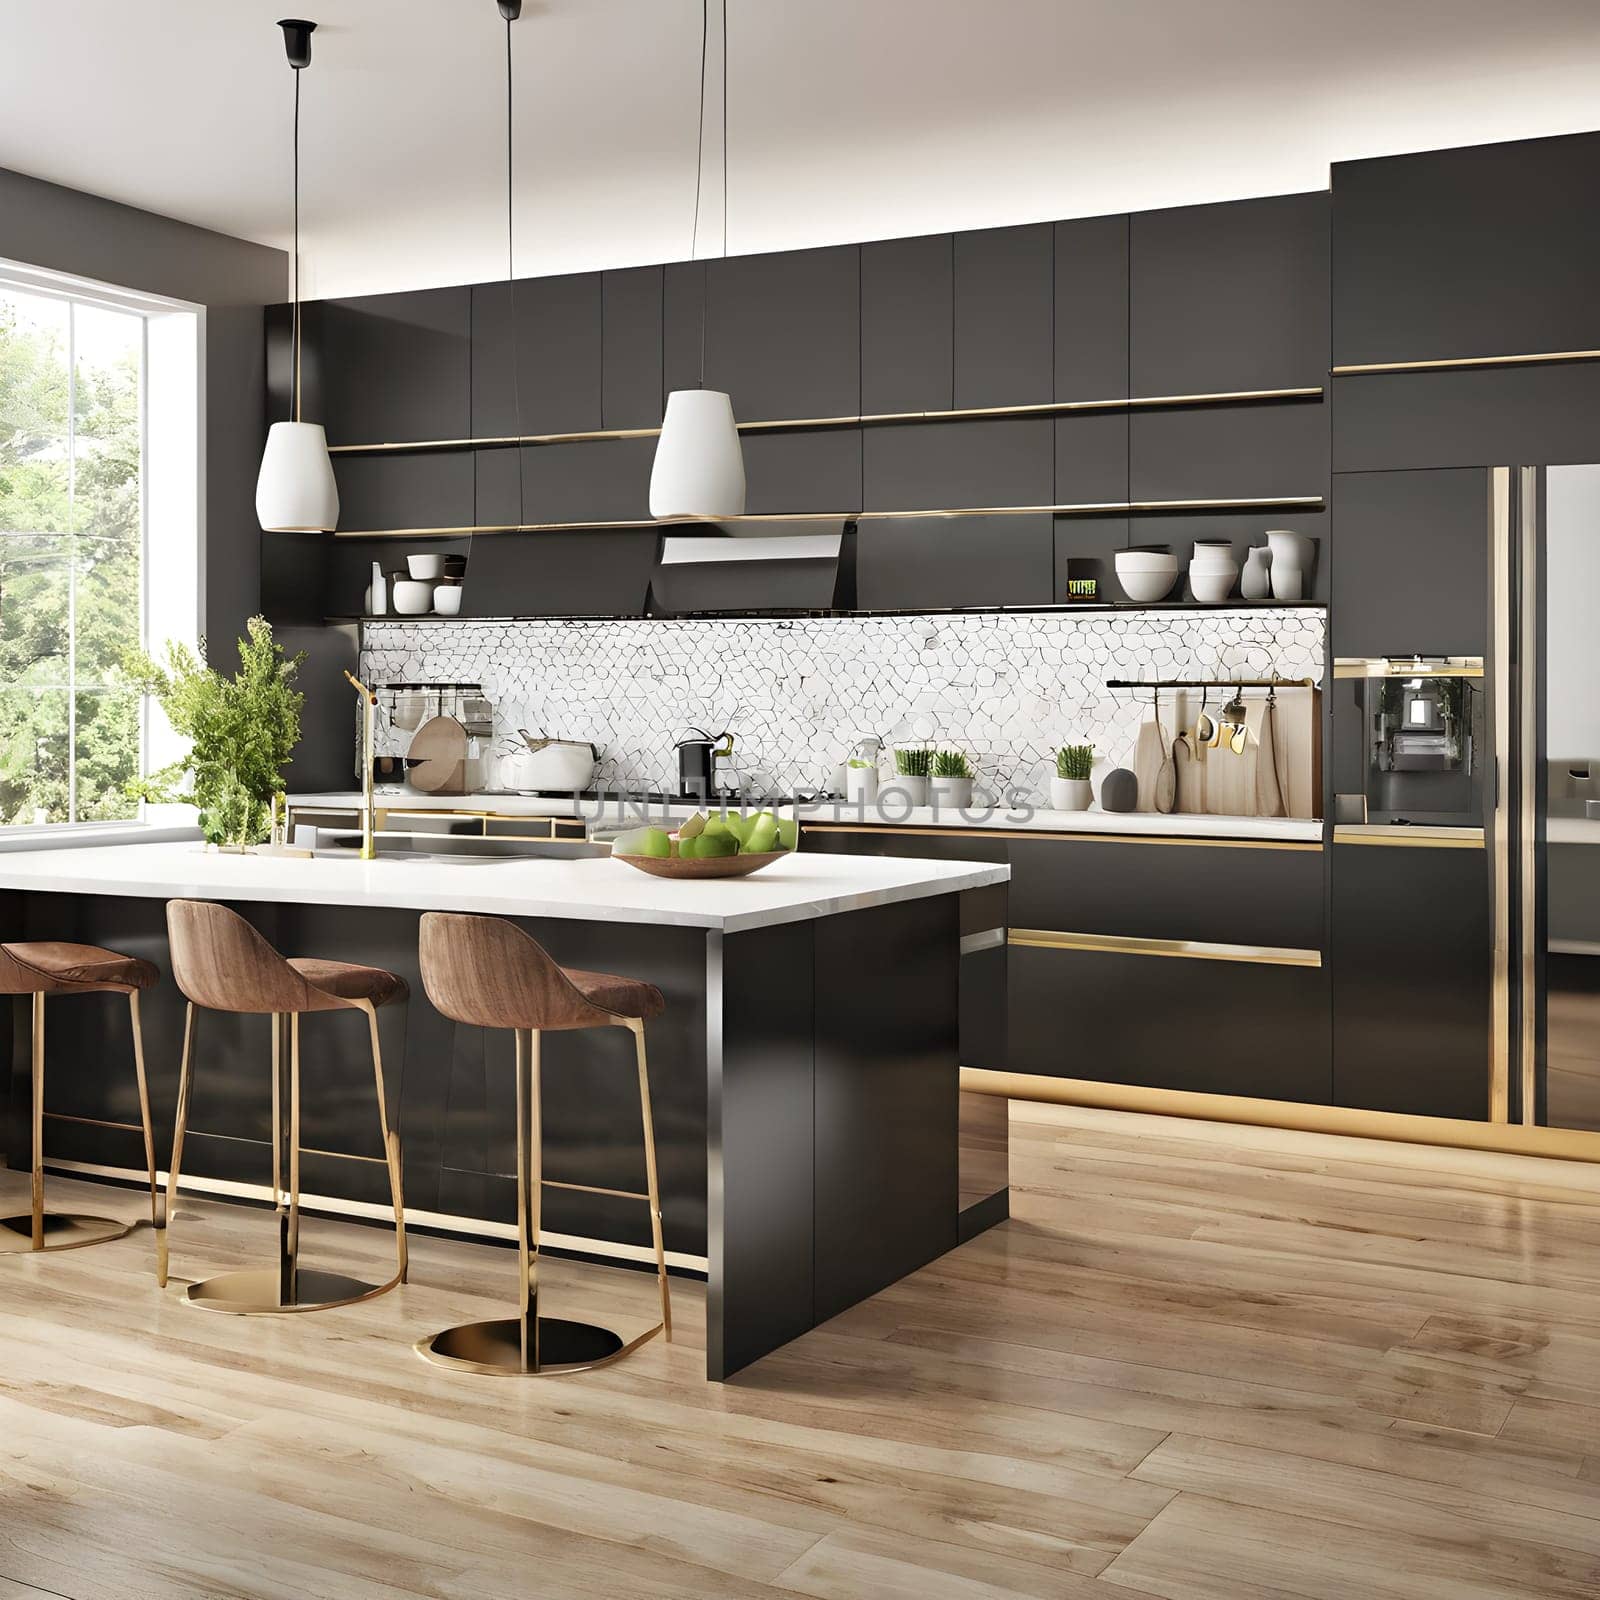 Luxurious Home Living: Stylish Kitchen Interiors